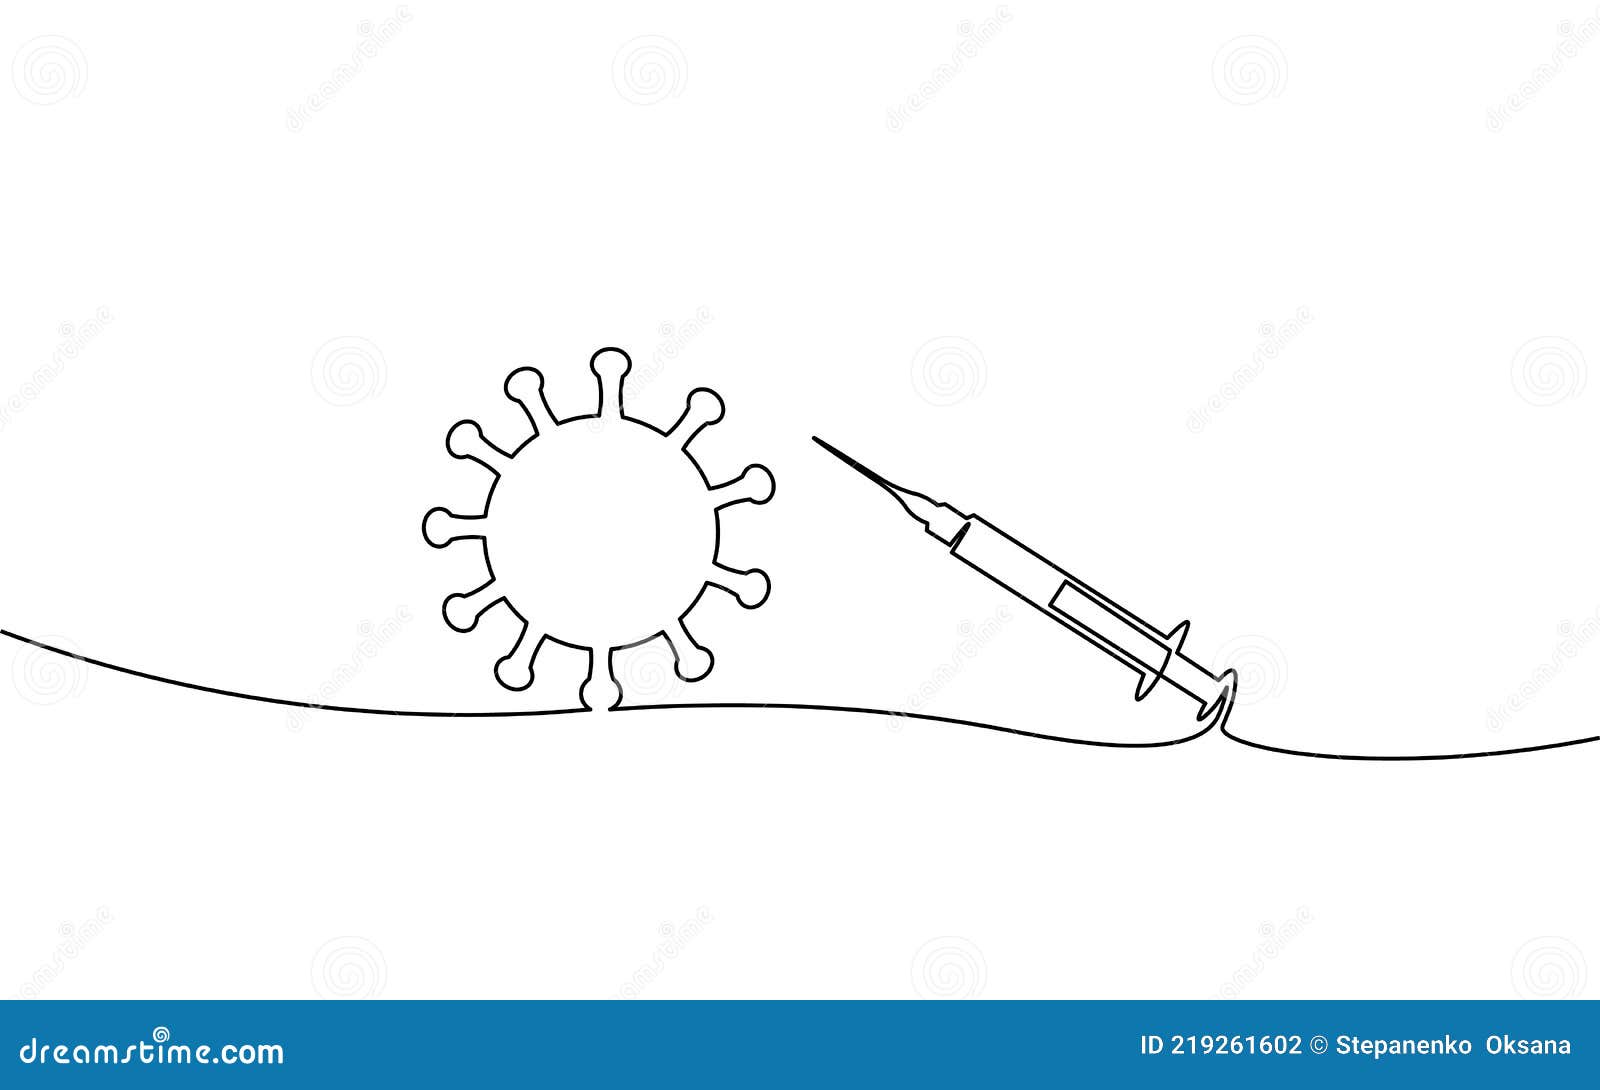 vaccine syringe one single line art concept. pandemic covid coronavirus safe hand drawn sketch. injection epidemia